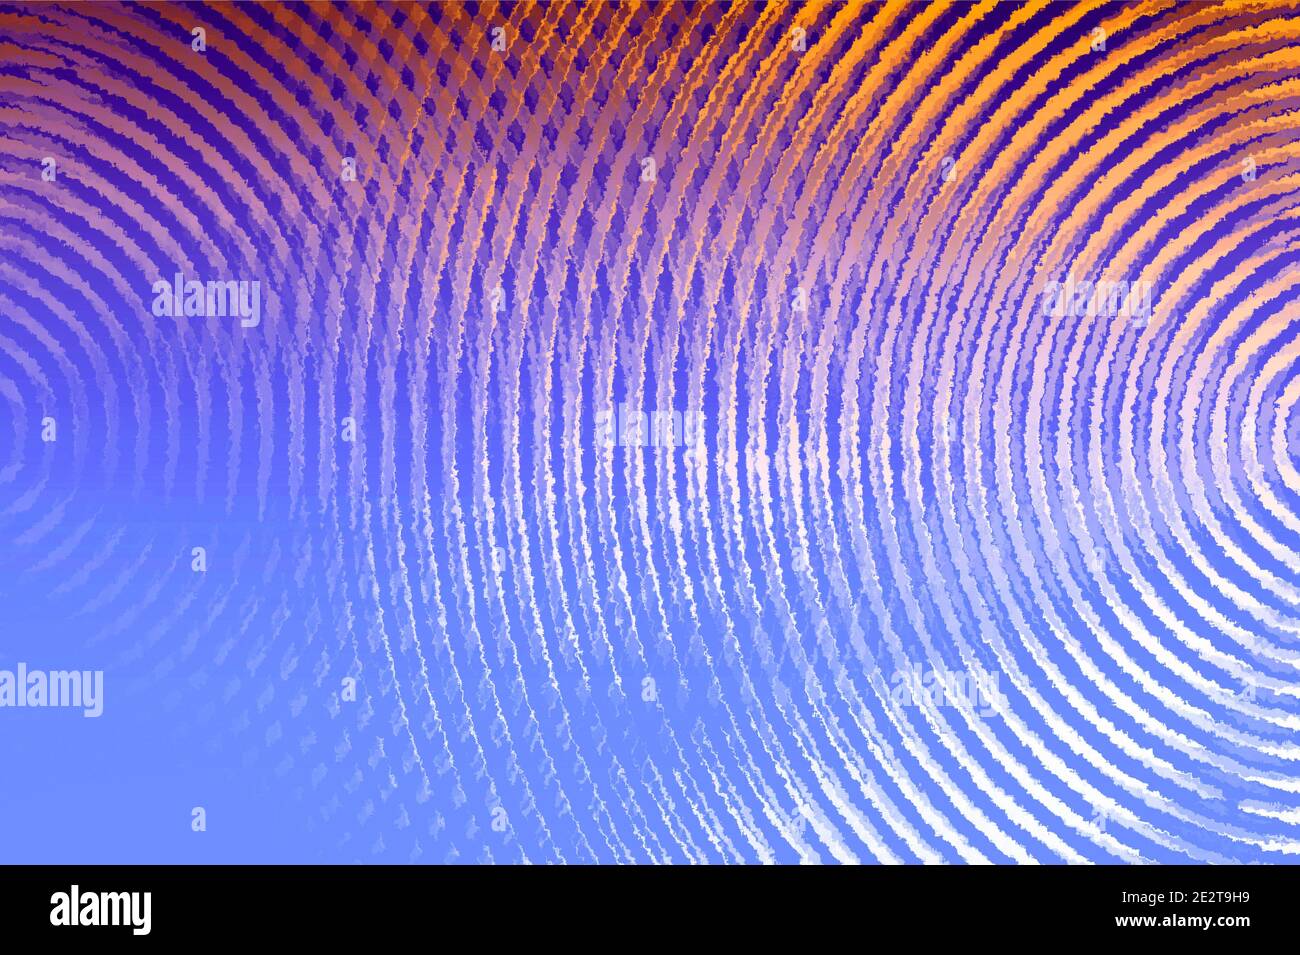 Light blue and orange overlapping sound waves background Stock Photo